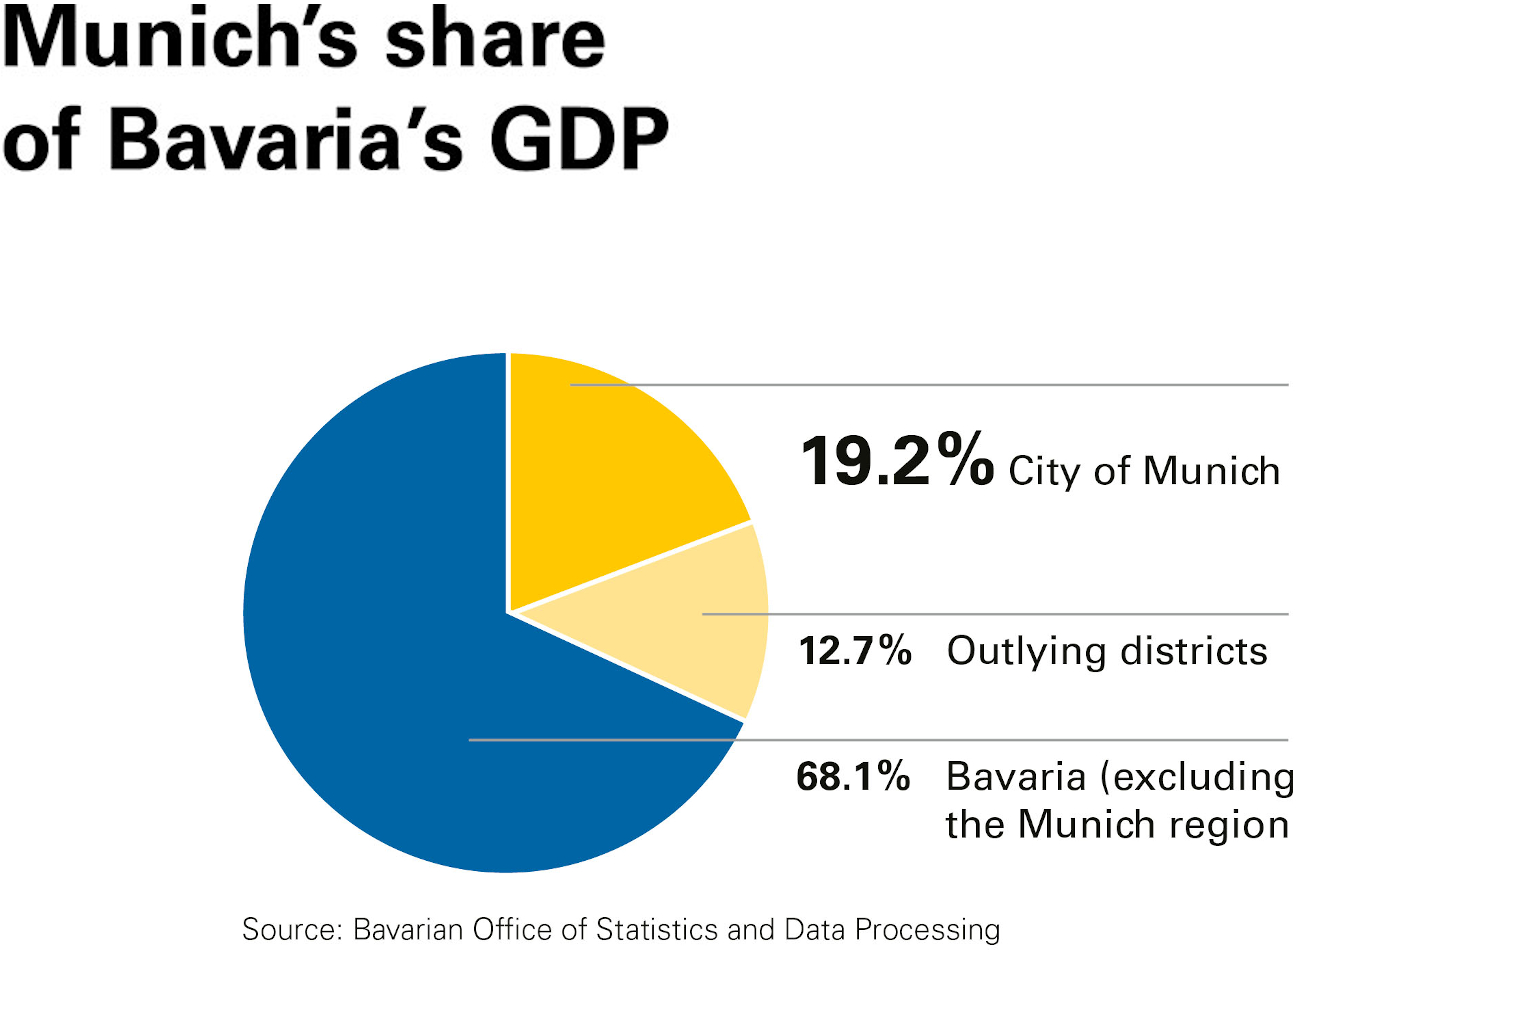 Munich's share of Bavaria's GDP